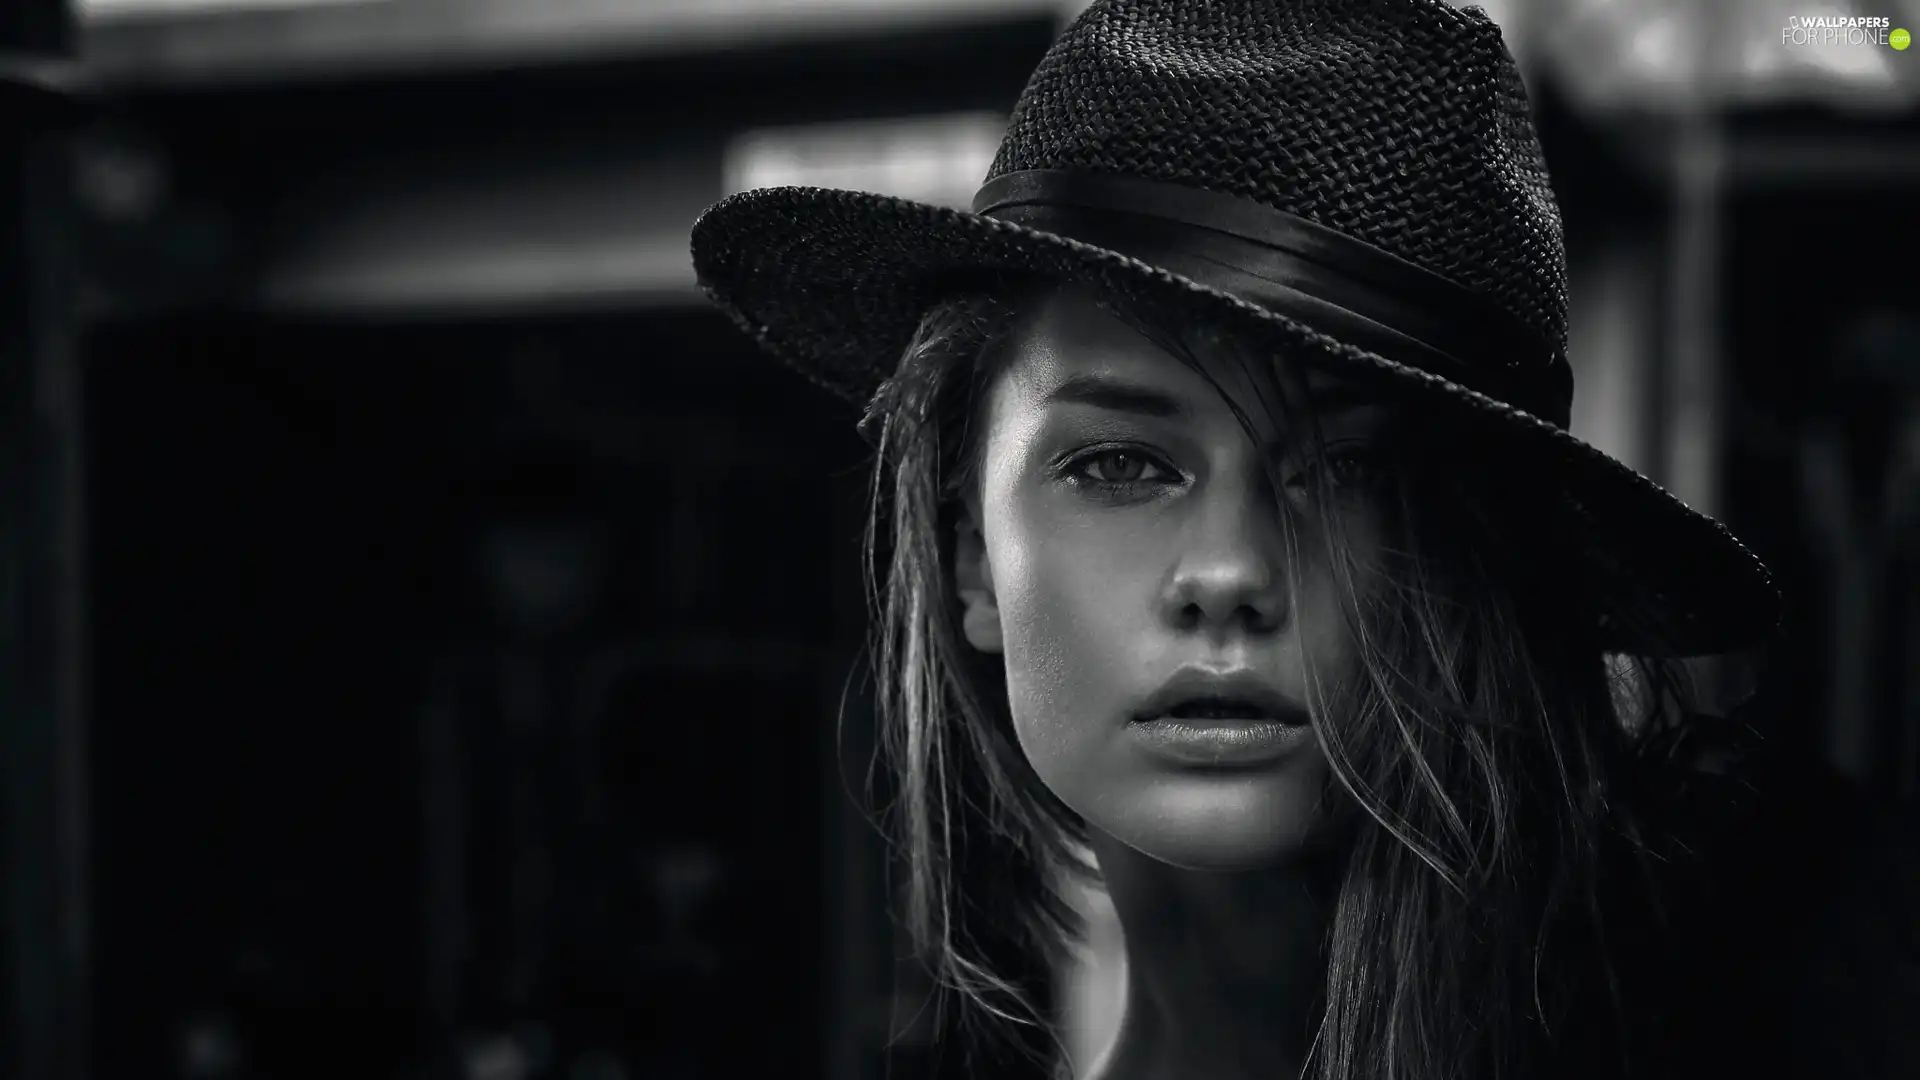 Brigita Maldutytė, Hat, Black and White, model